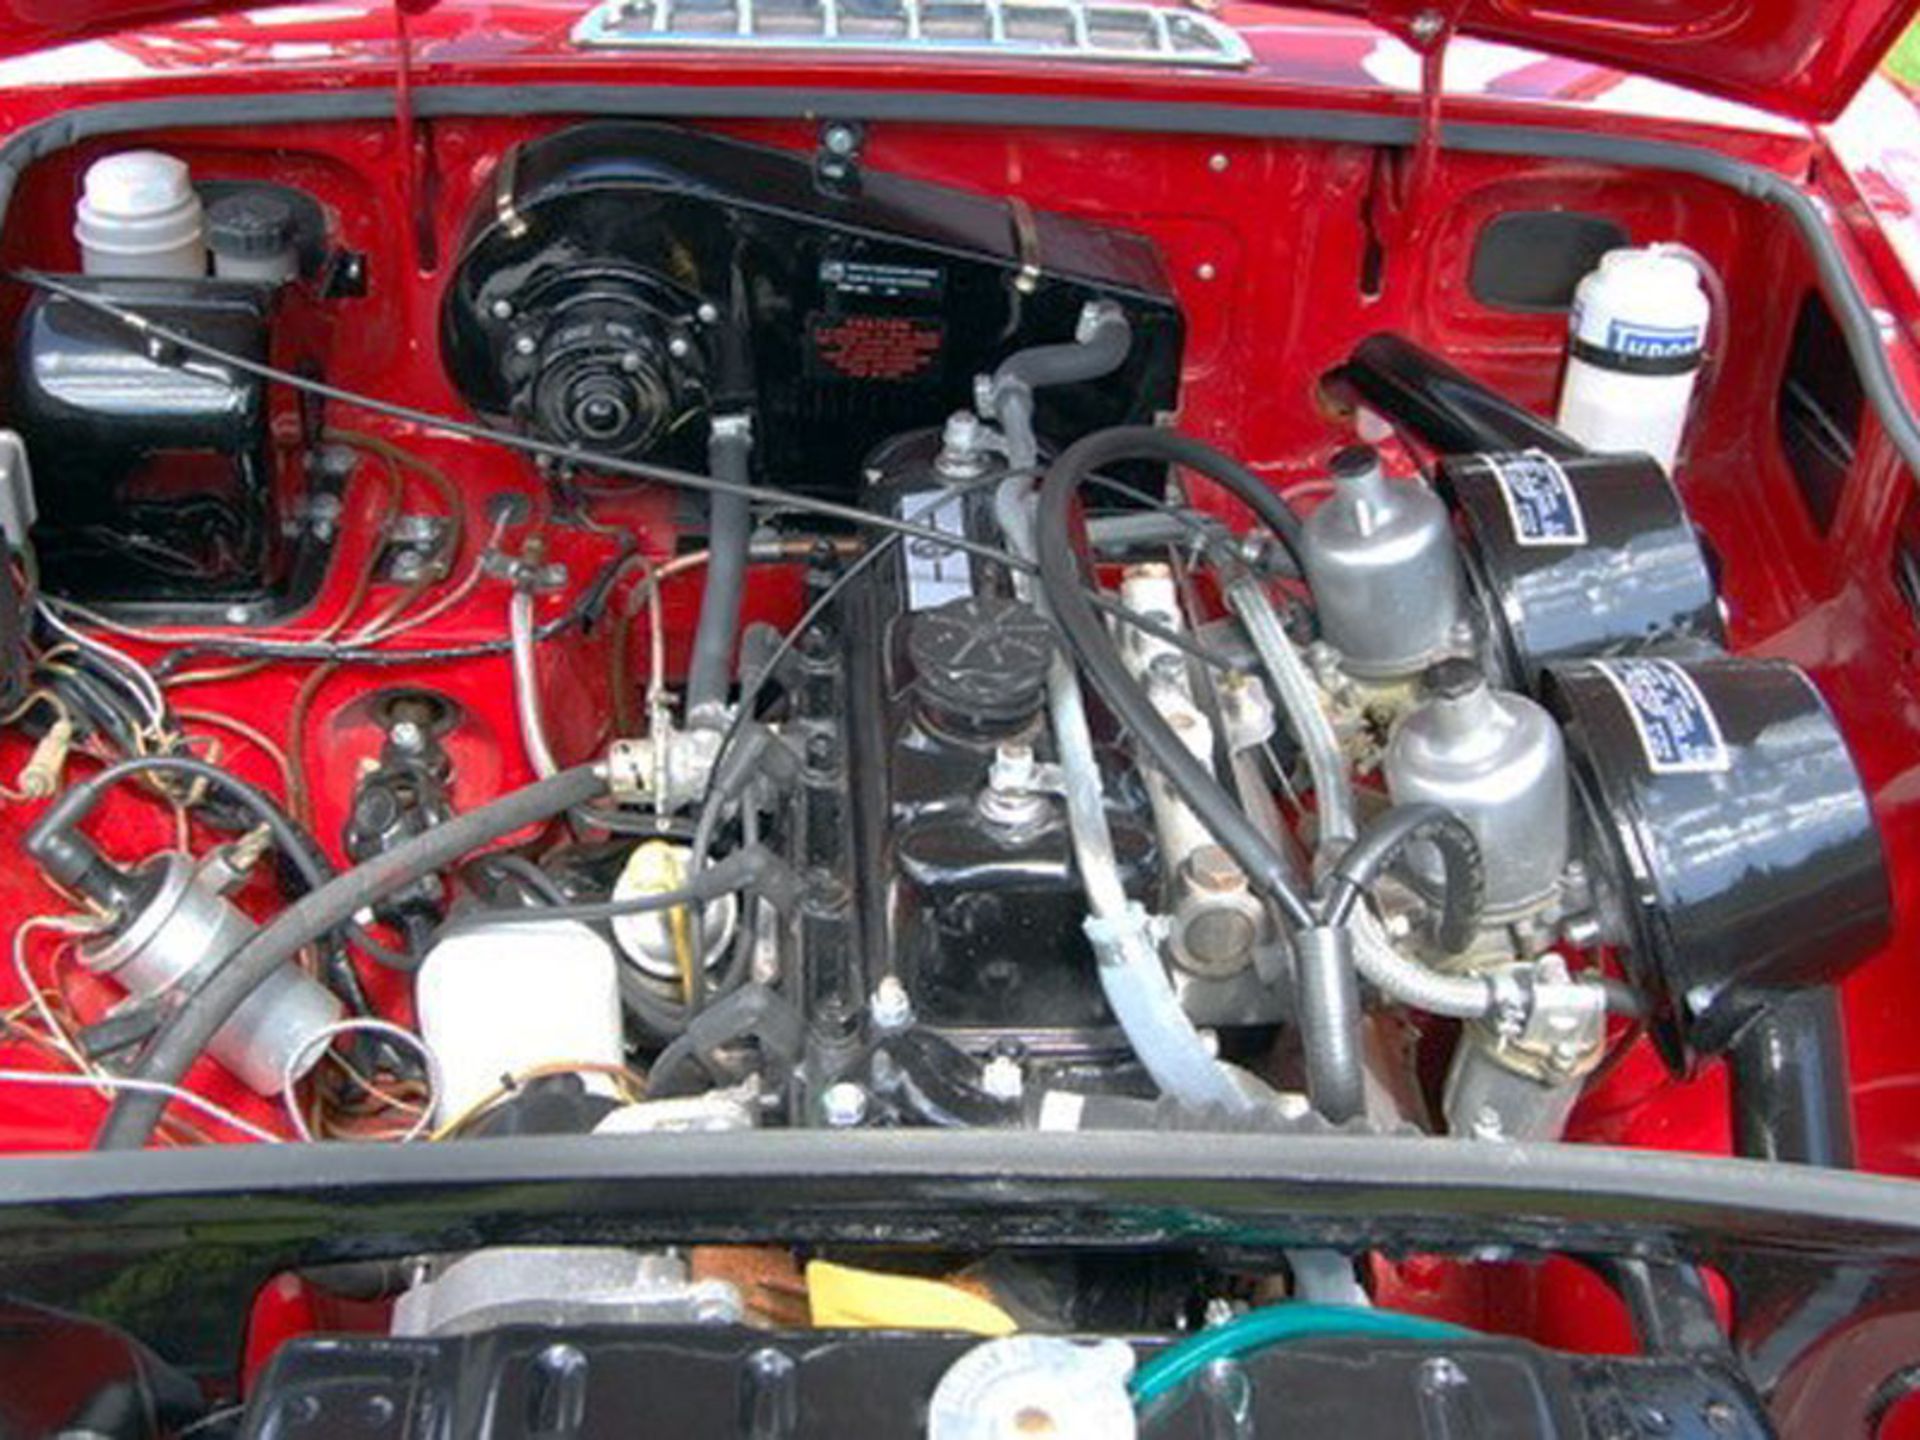 1971 MG B GT - Image 6 of 6